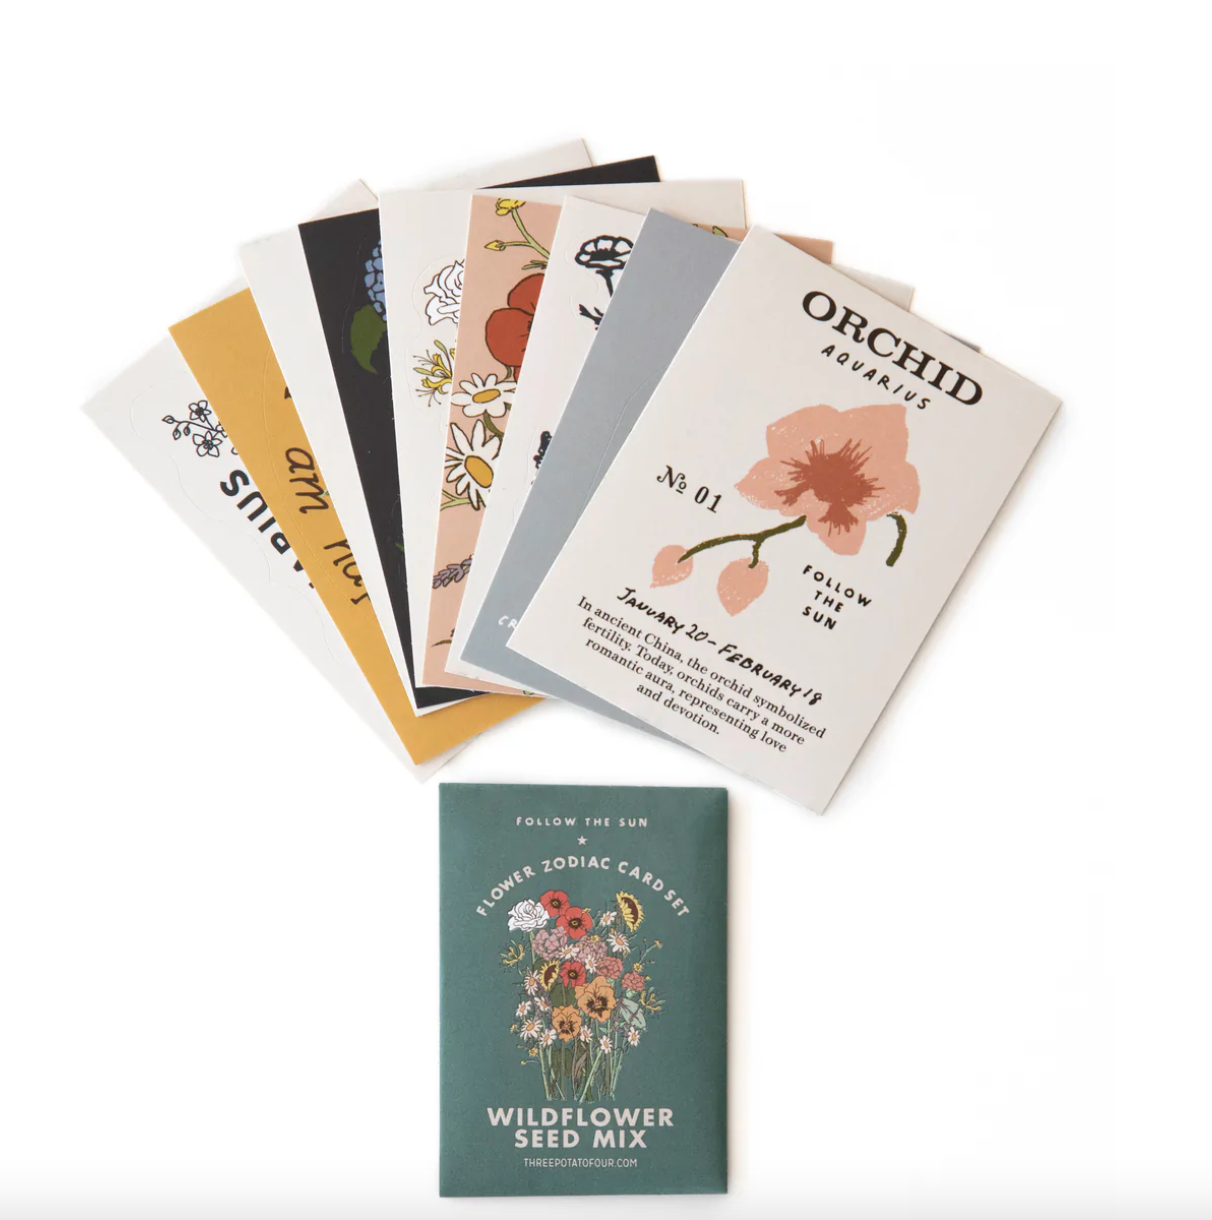 Flower Zodiac Sticker Card Set + Seeds (Aquarius)